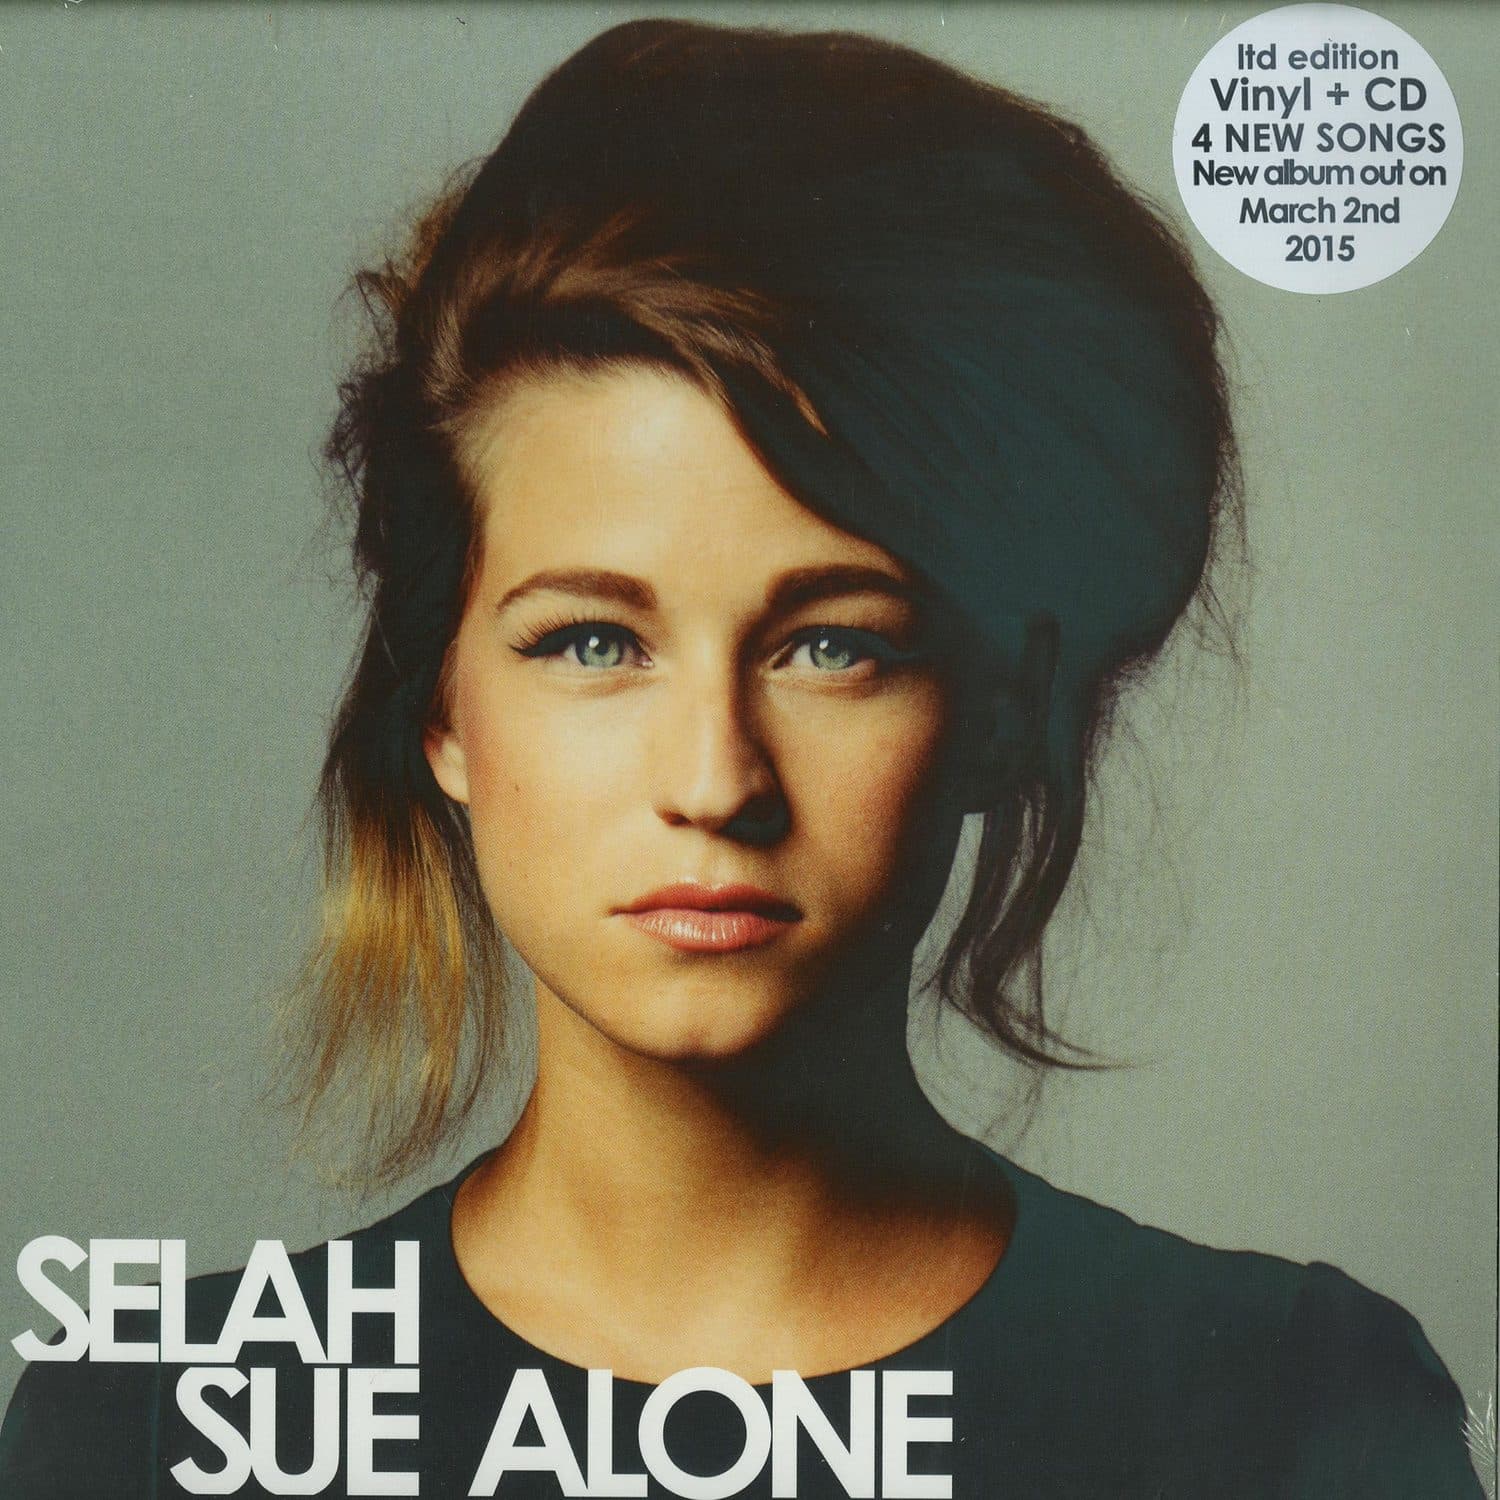 Selah Sue - ALONE EP 